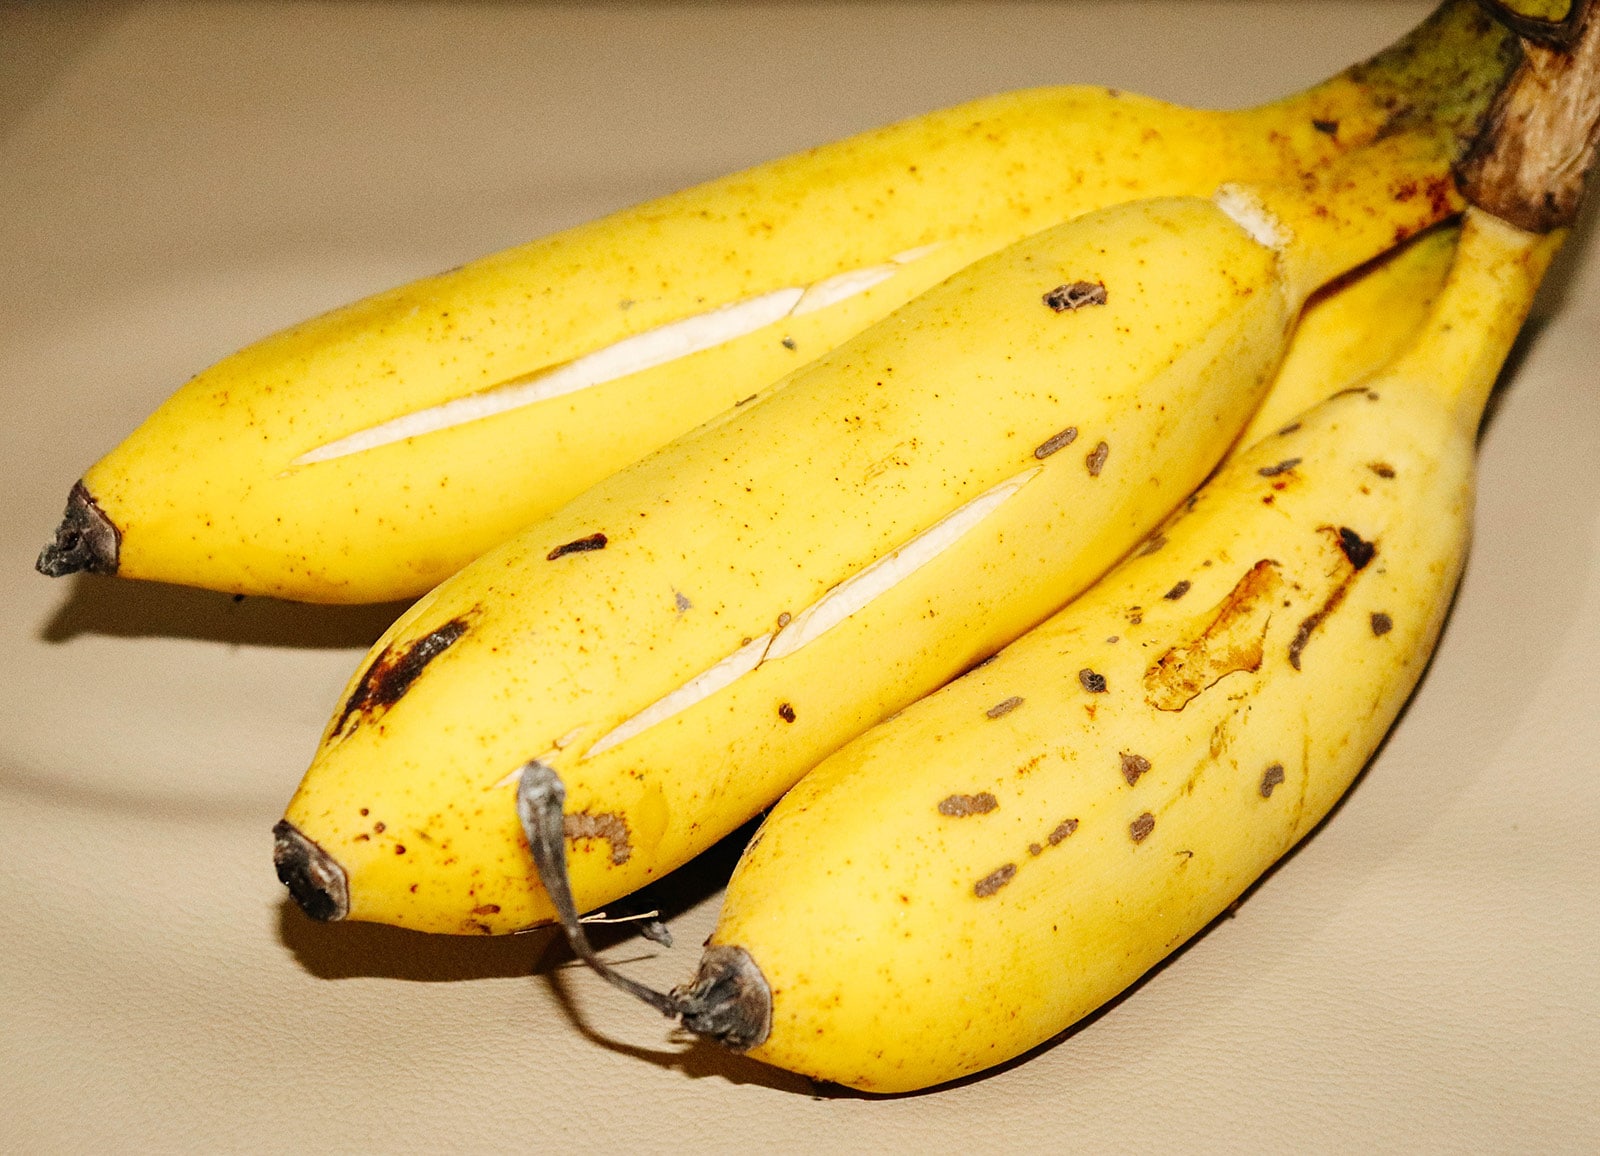 Ripe bananas with split open peels